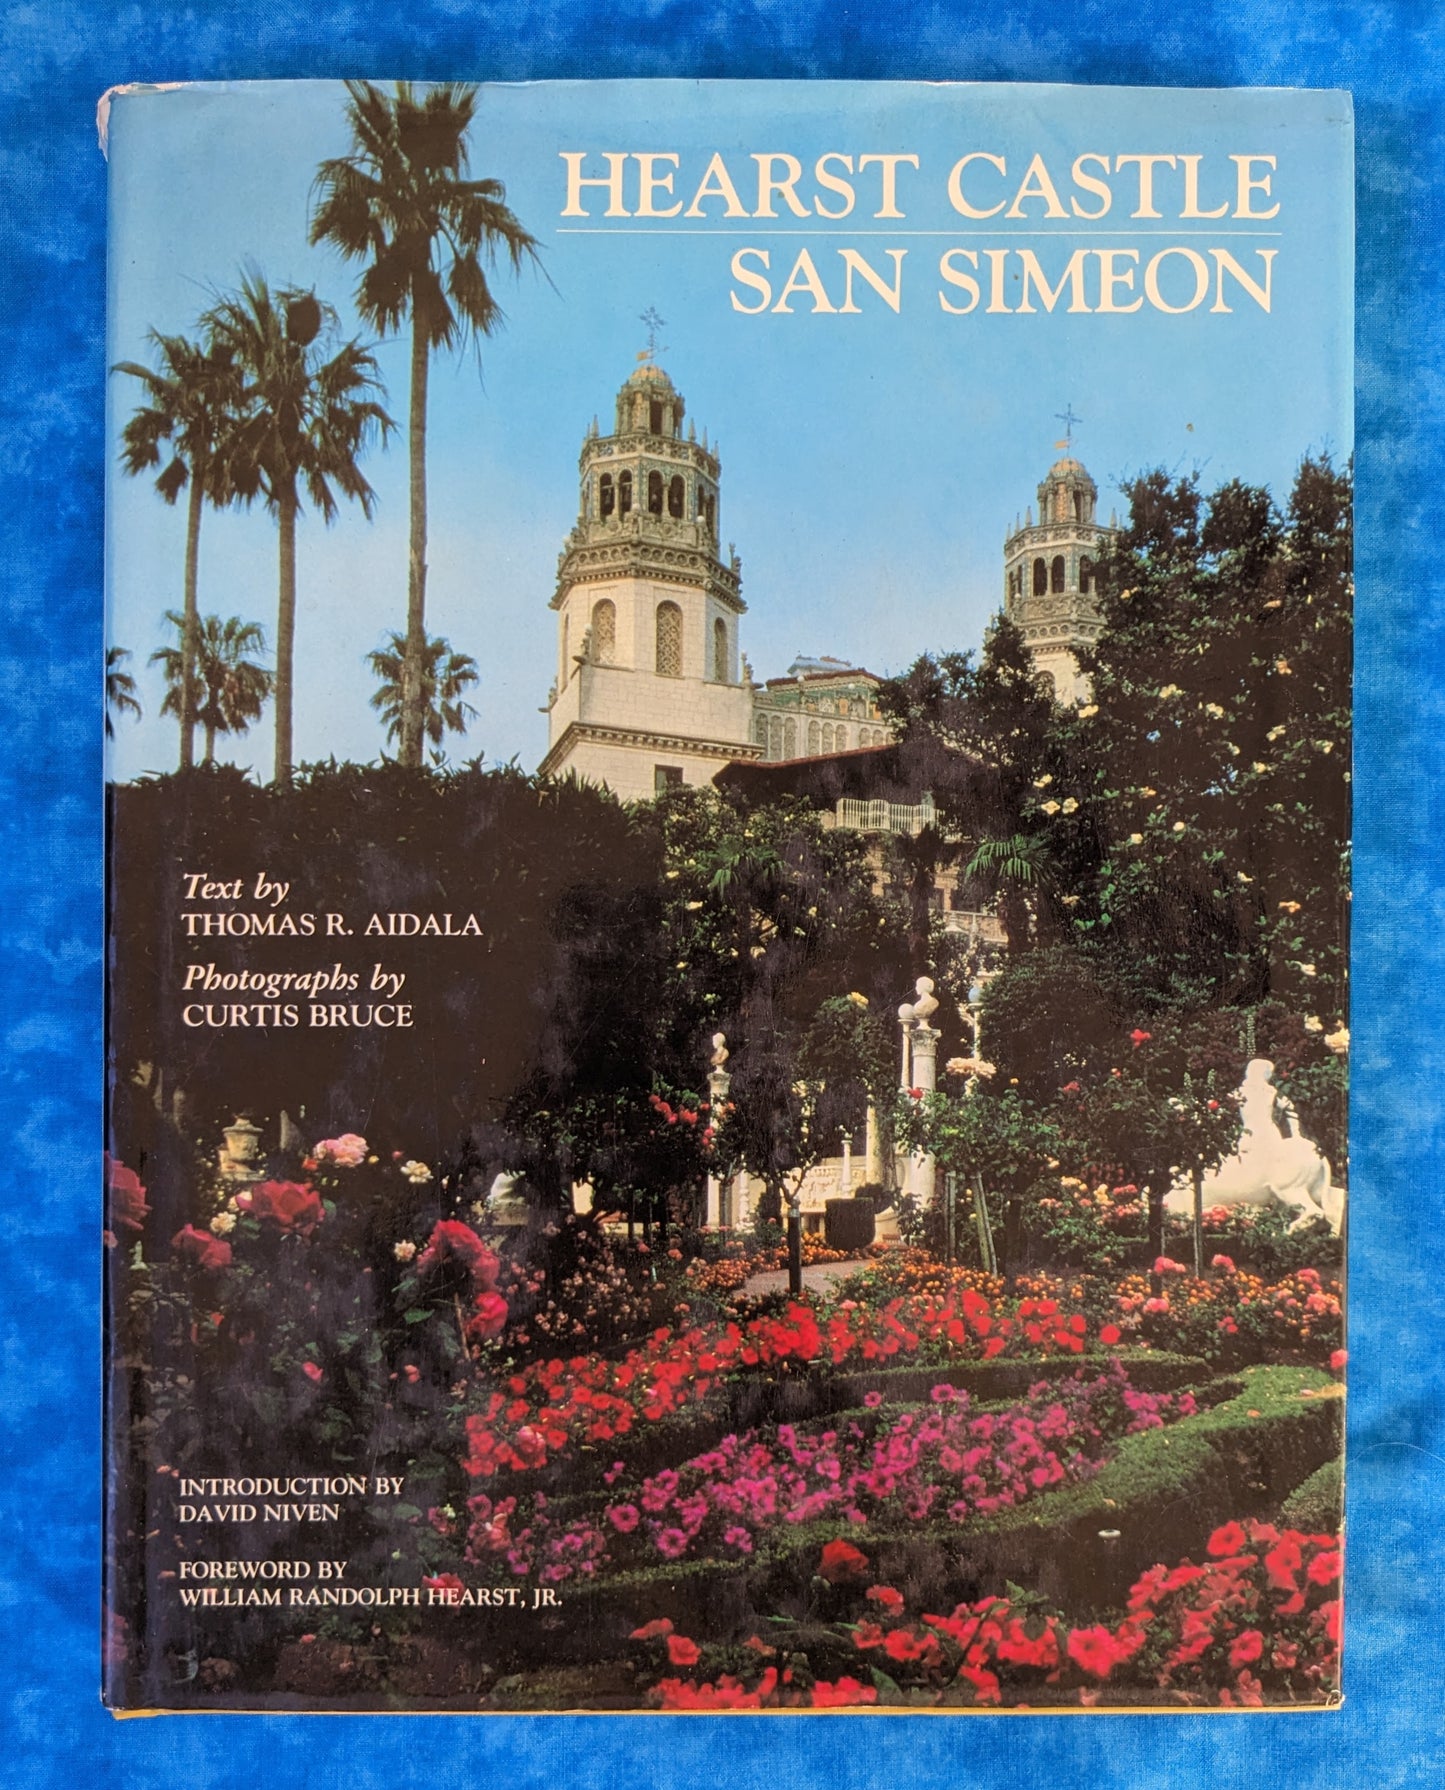 Hearst Castle San Simeon vintage book front cover